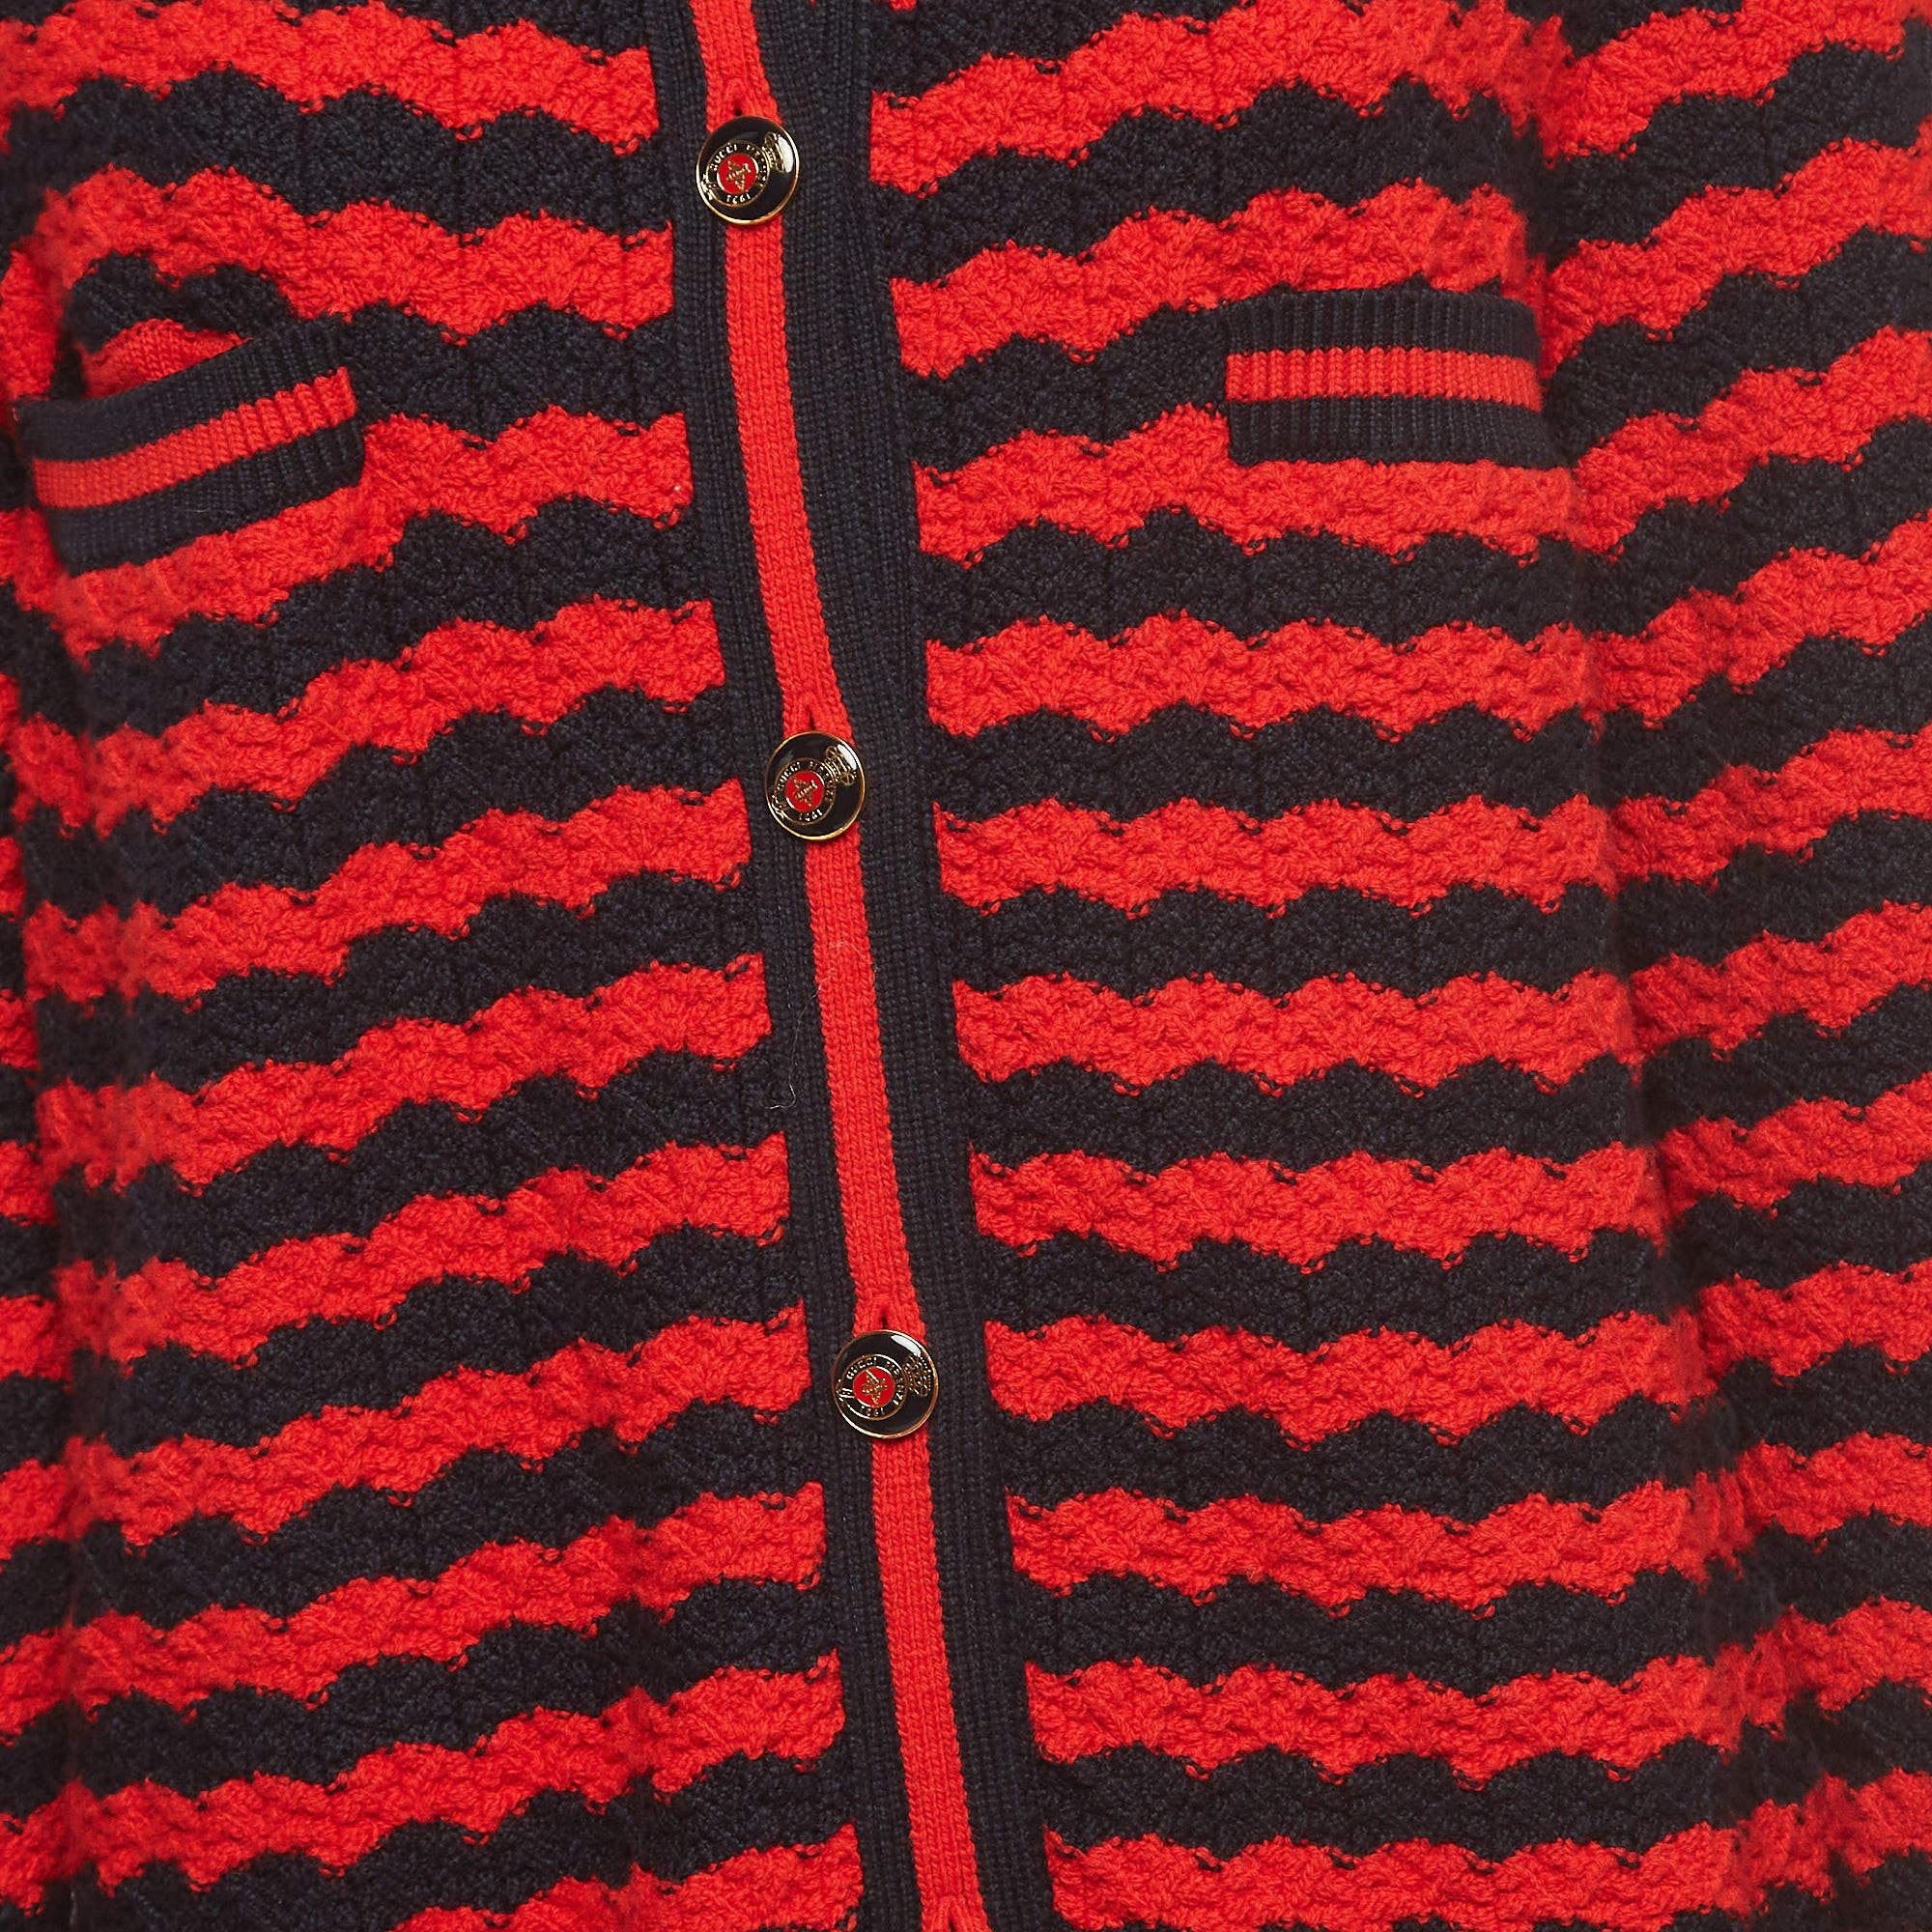 Gucci Red Striped Knit Long Cardigan M In Excellent Condition For Sale In Dubai, Al Qouz 2